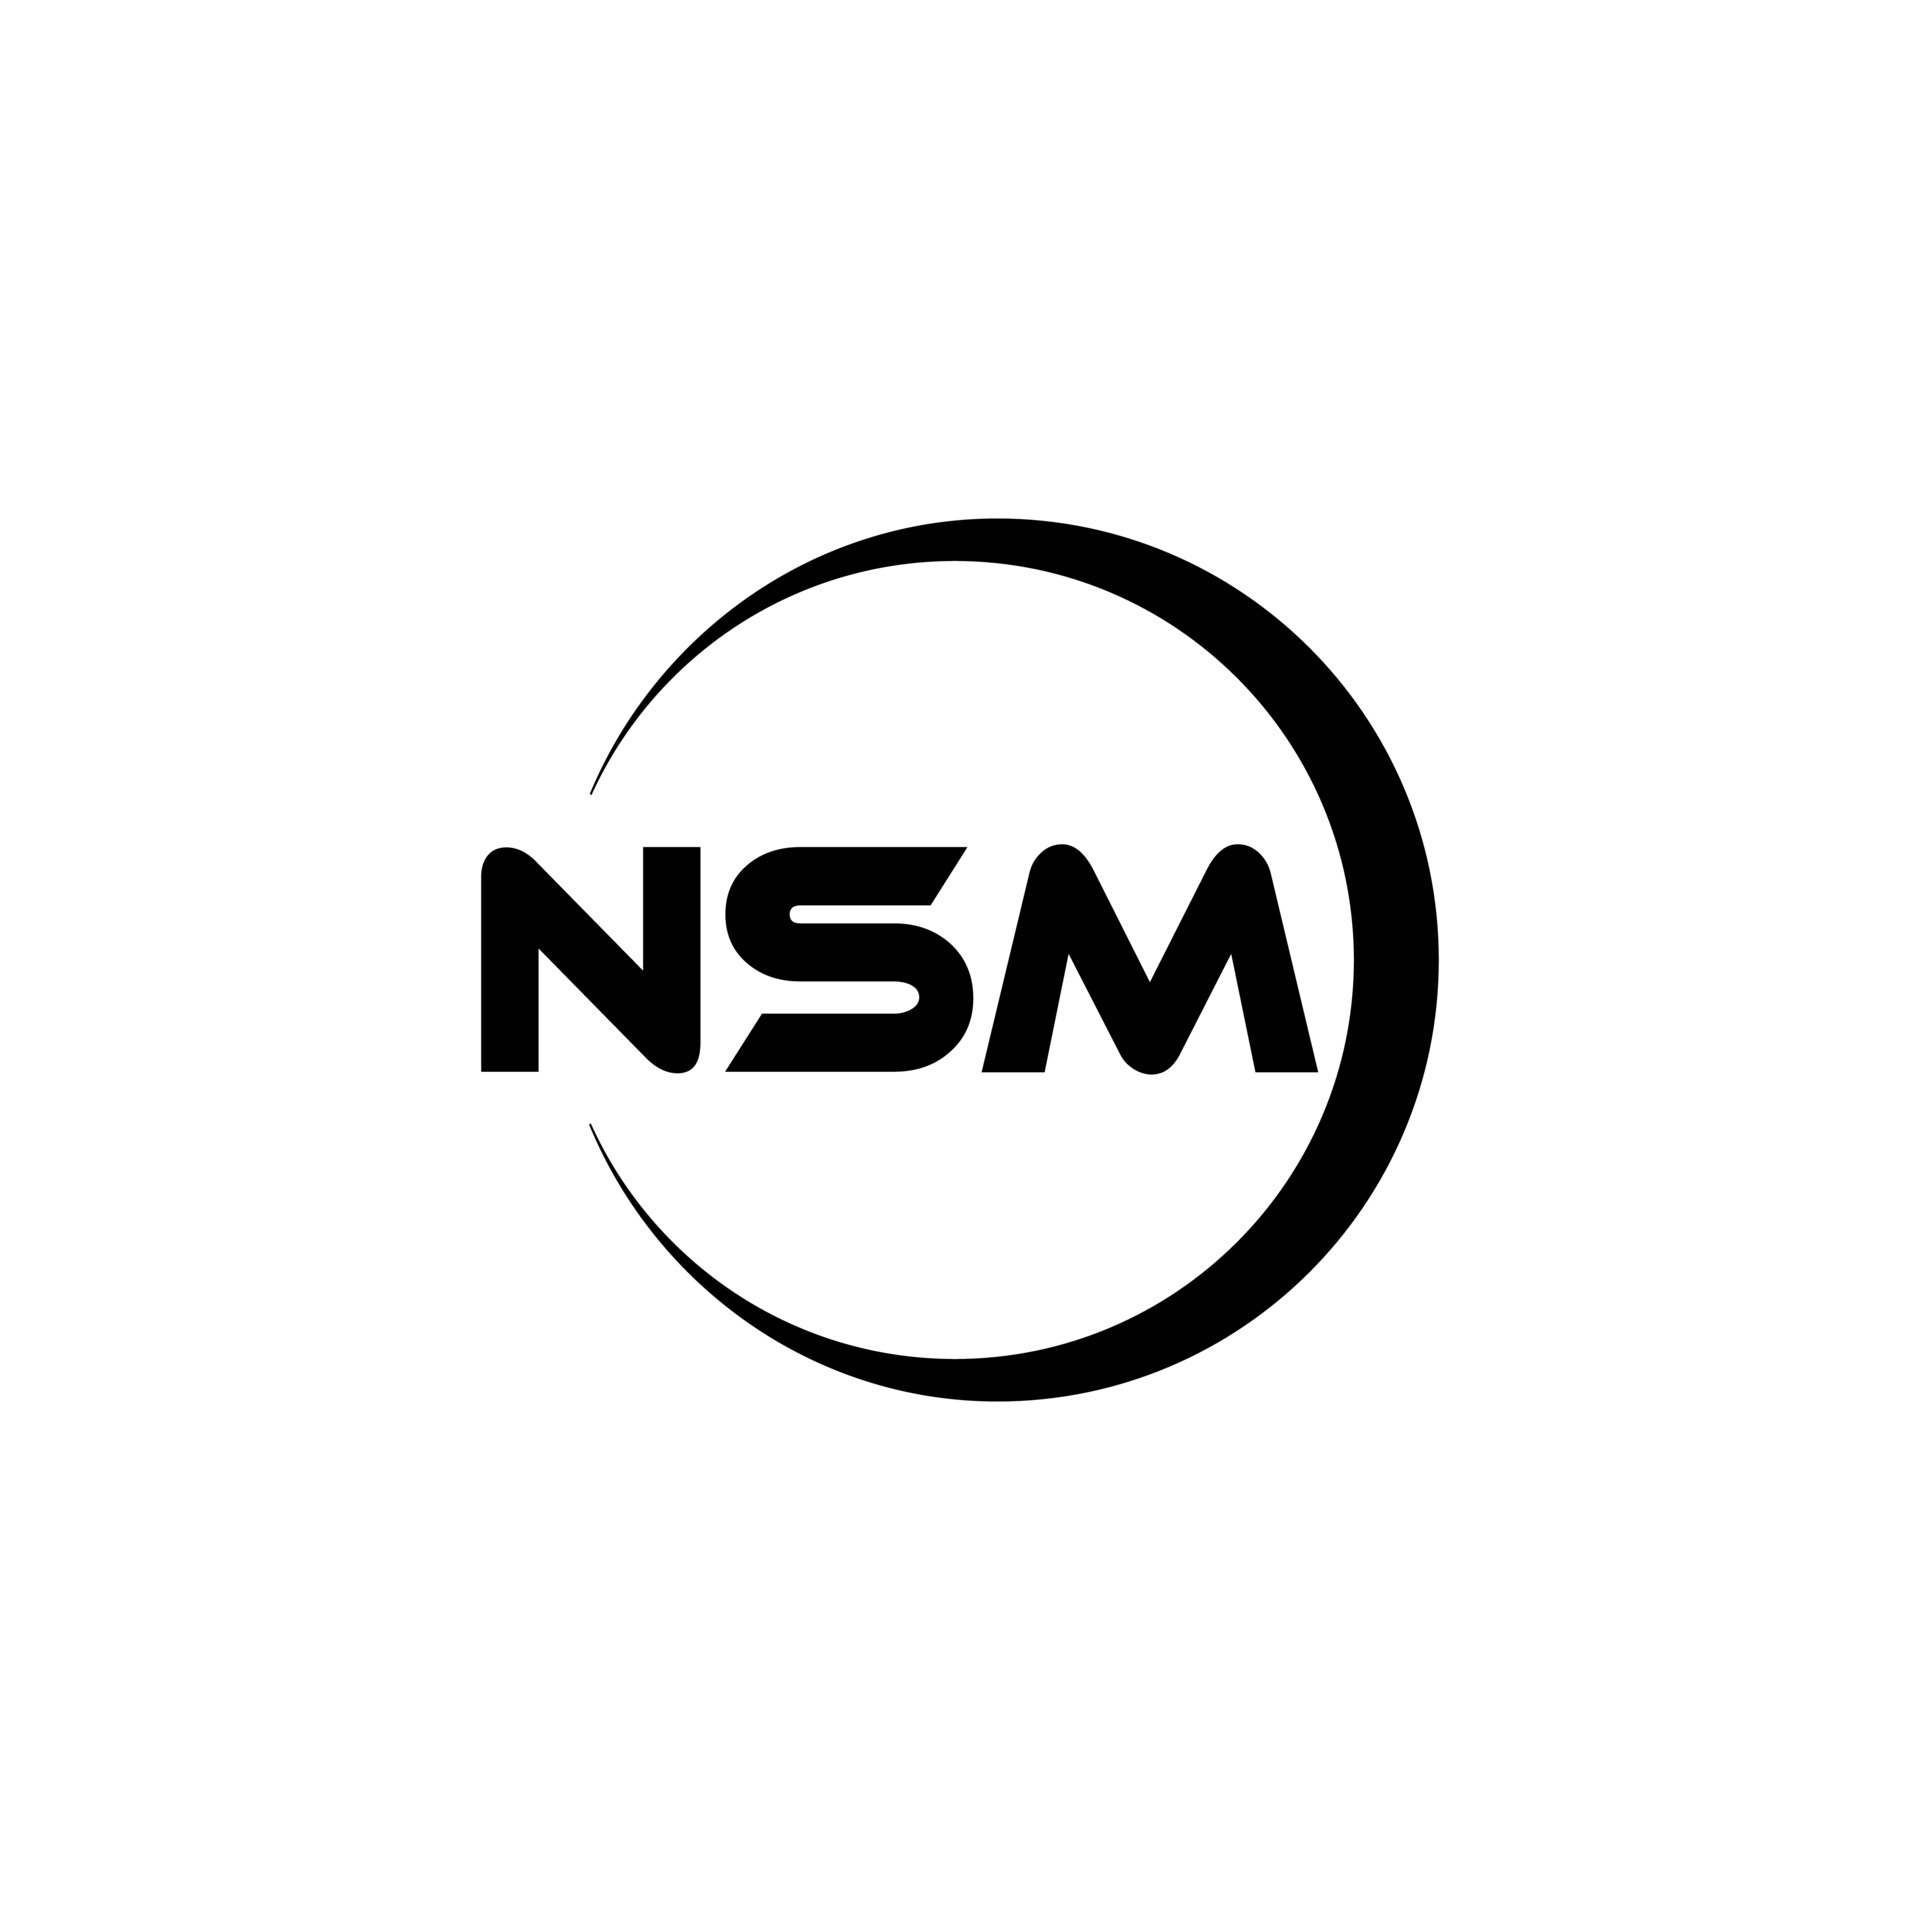 NSM Full NAVY logo | IN WDSTK